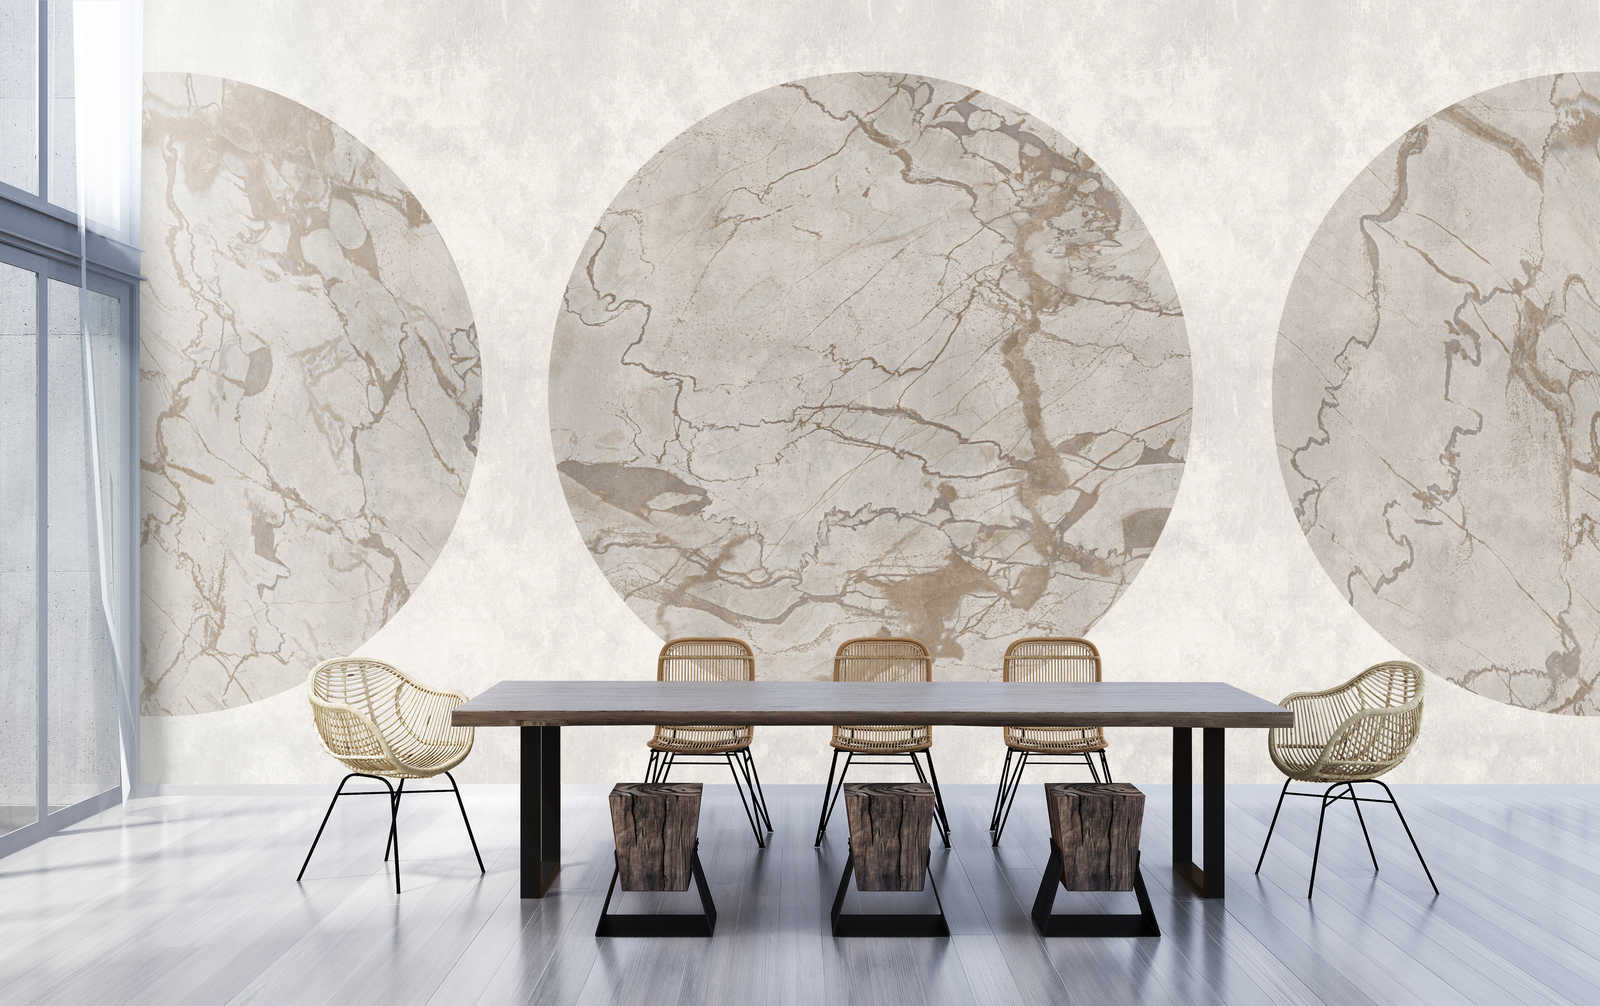             Mercurio 1 - Grey mural marble greige with circle motif
        